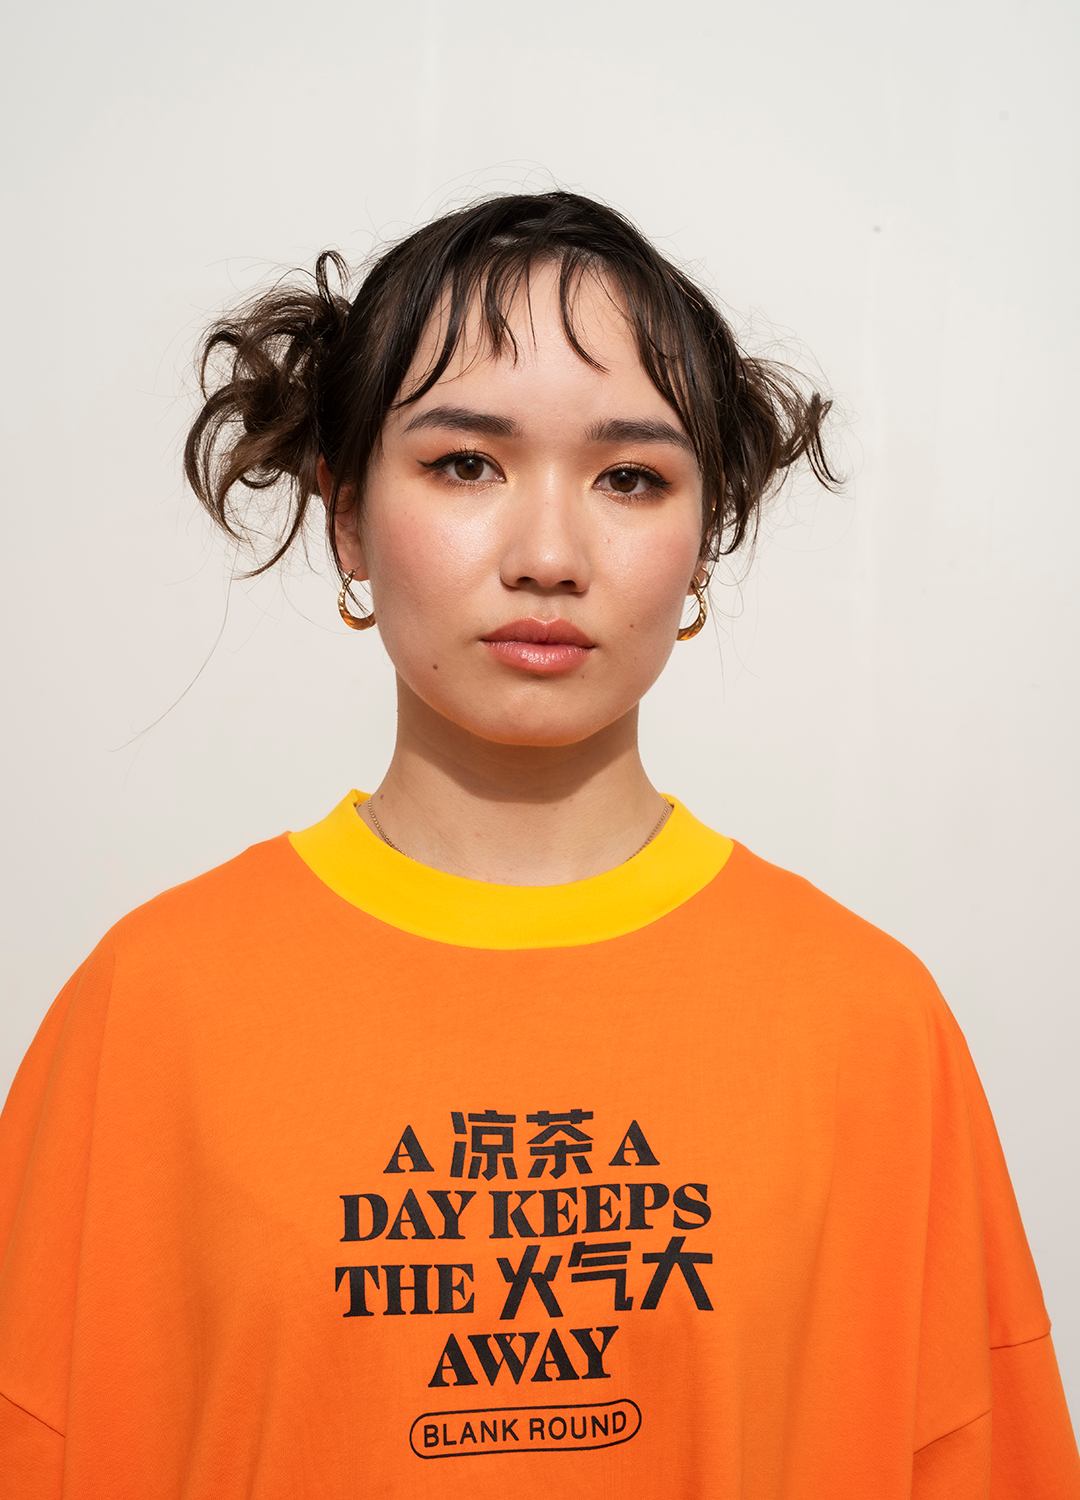 Kasaya Orange Short Sleeved Tee - Limited Edition